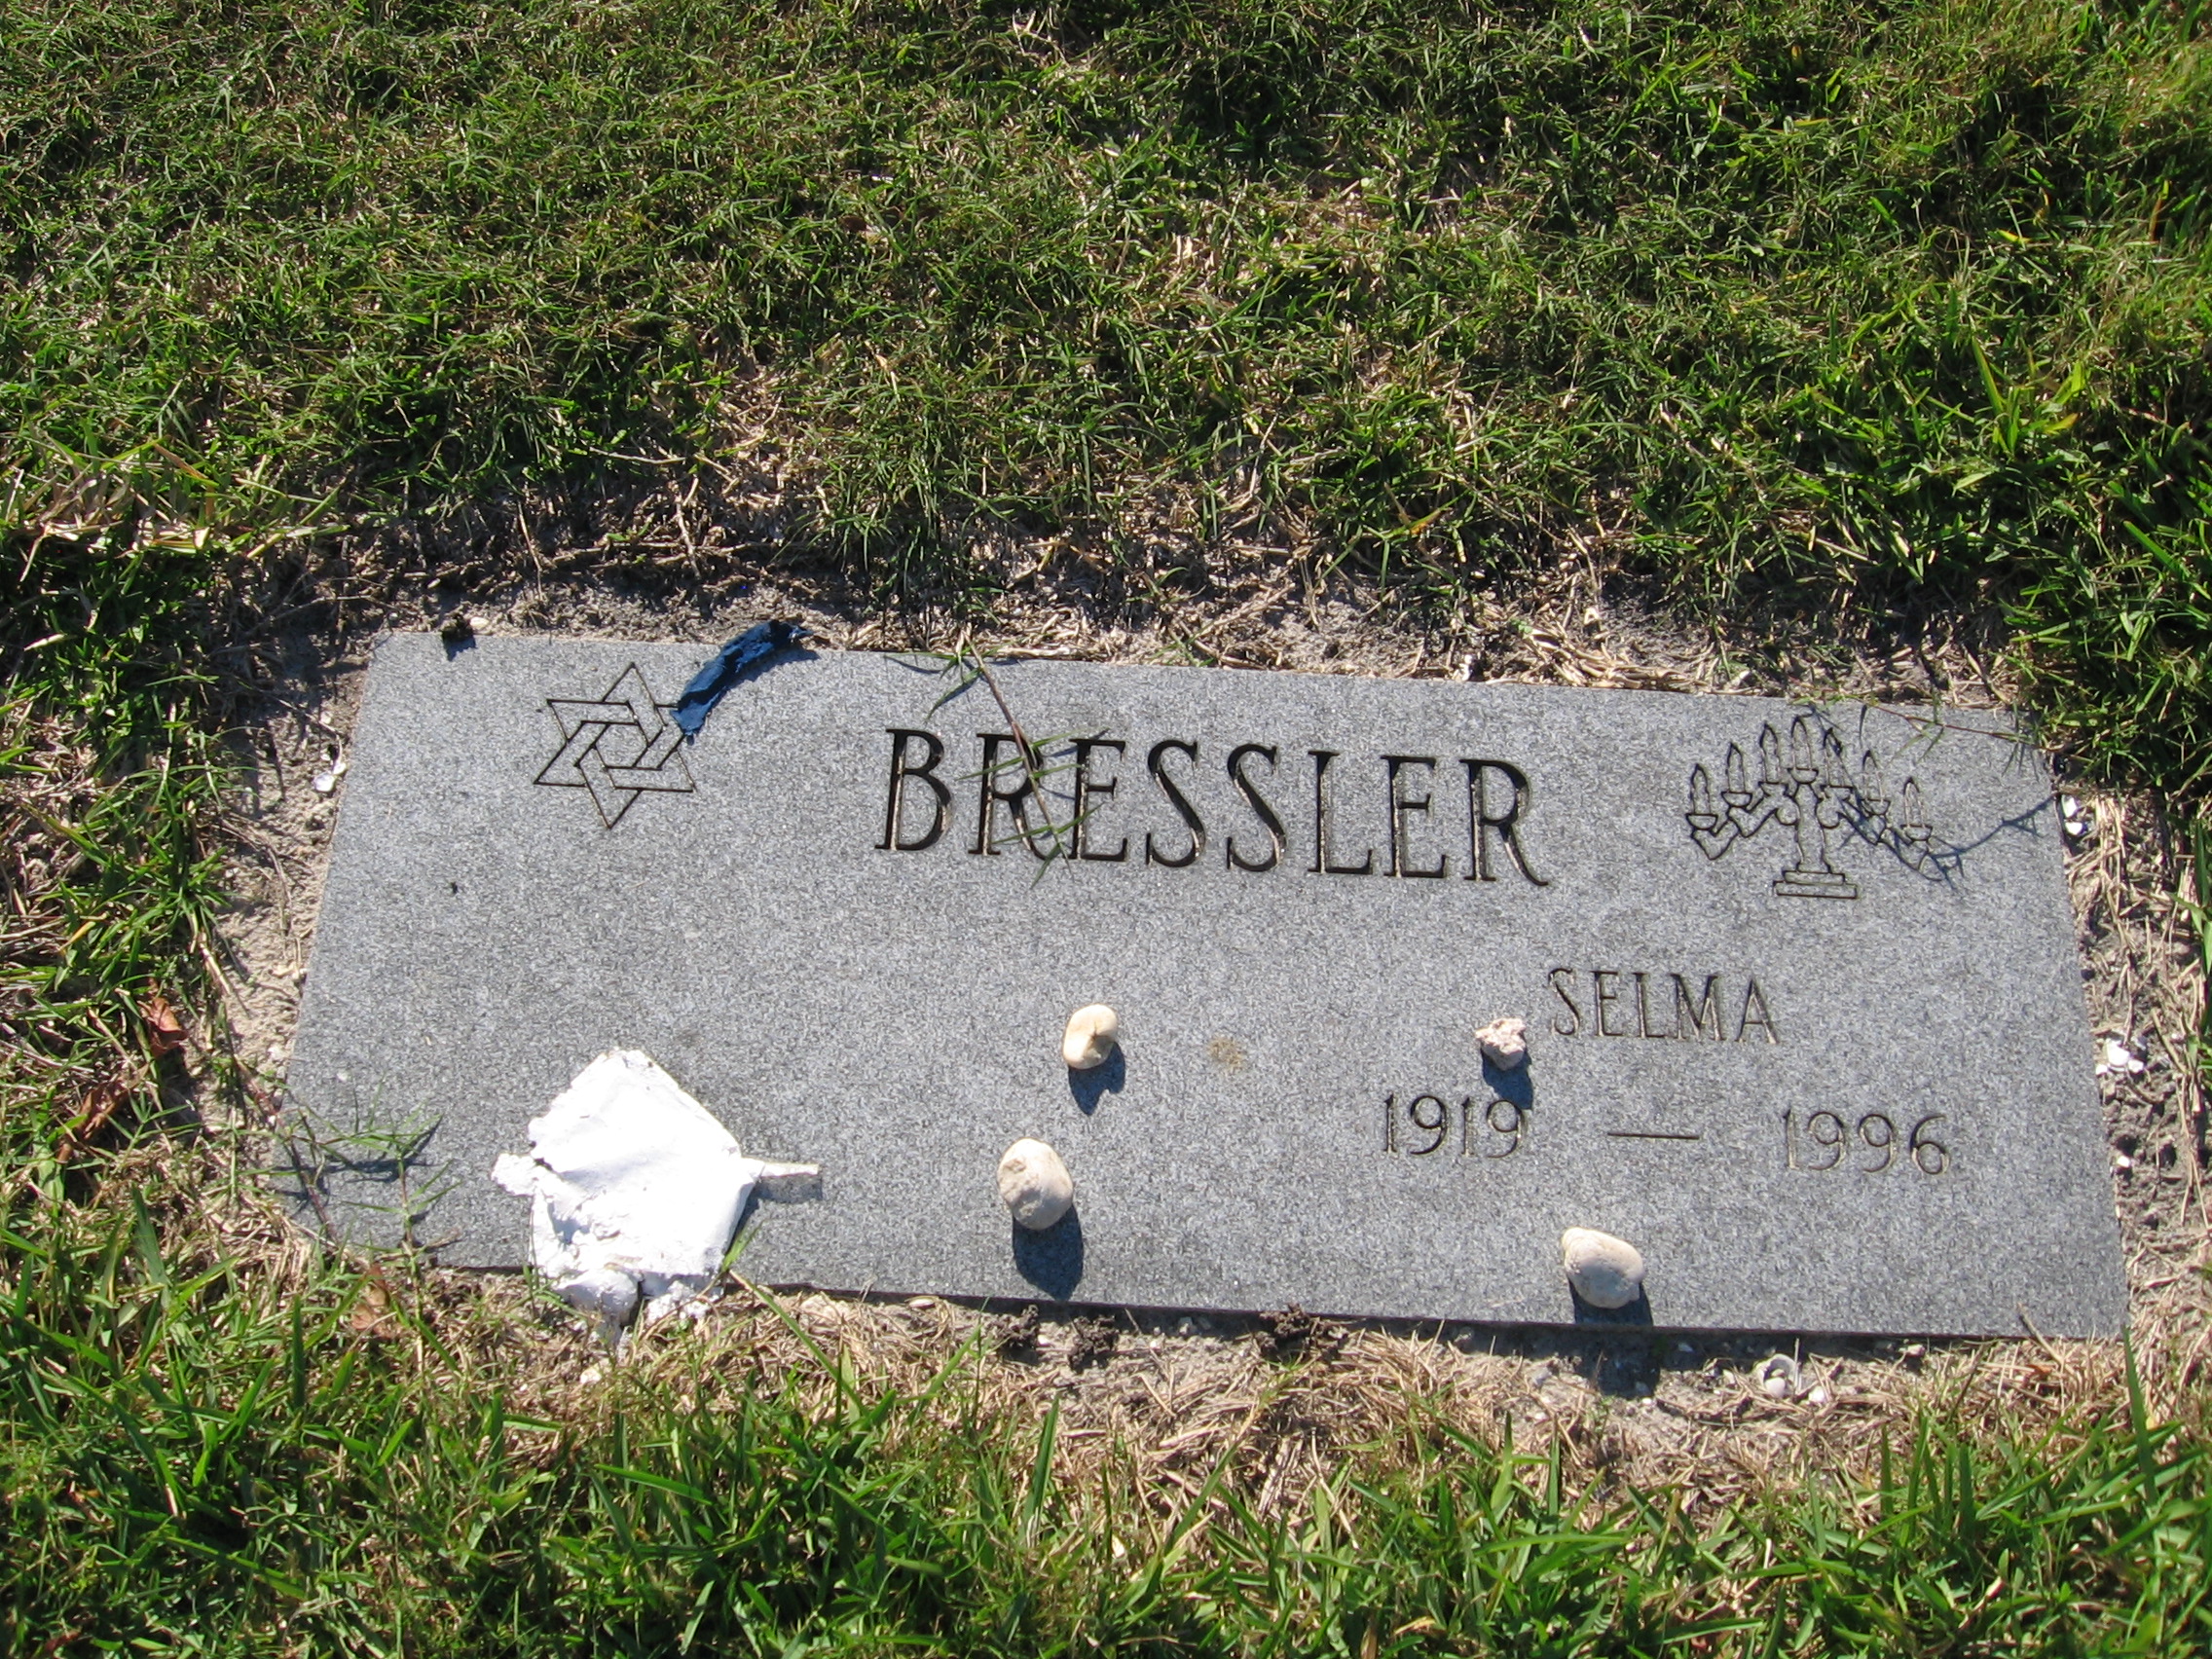 Selma Bressler